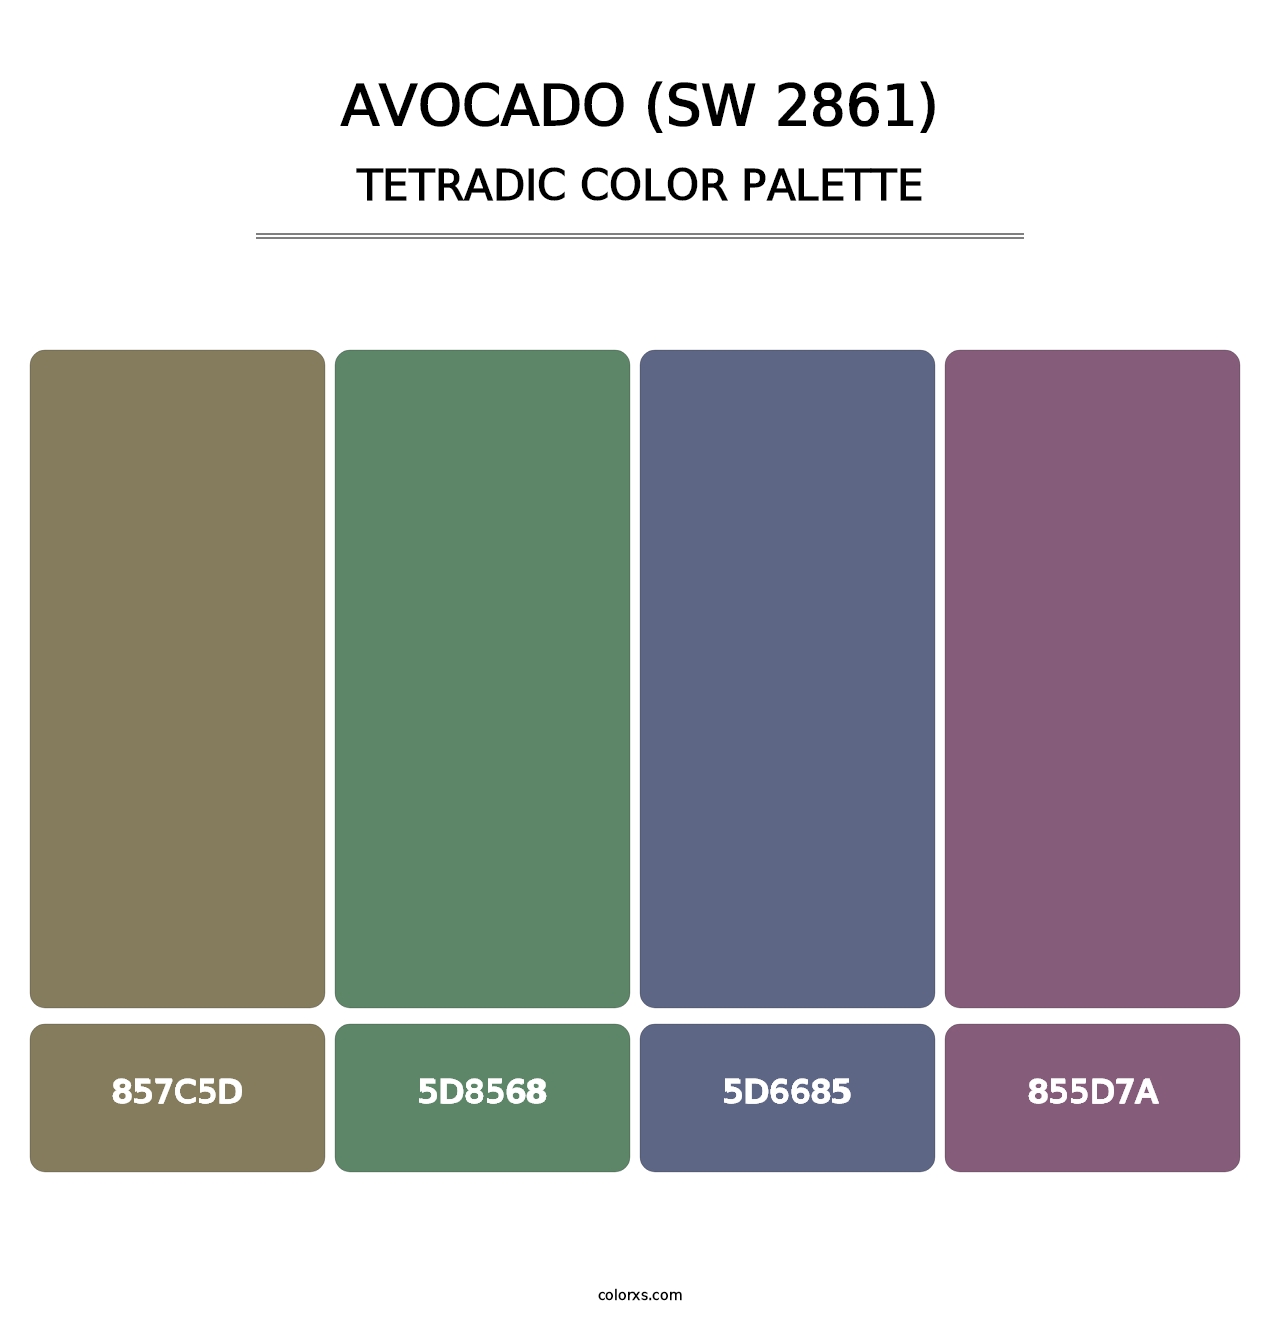 Avocado (SW 2861) - Tetradic Color Palette